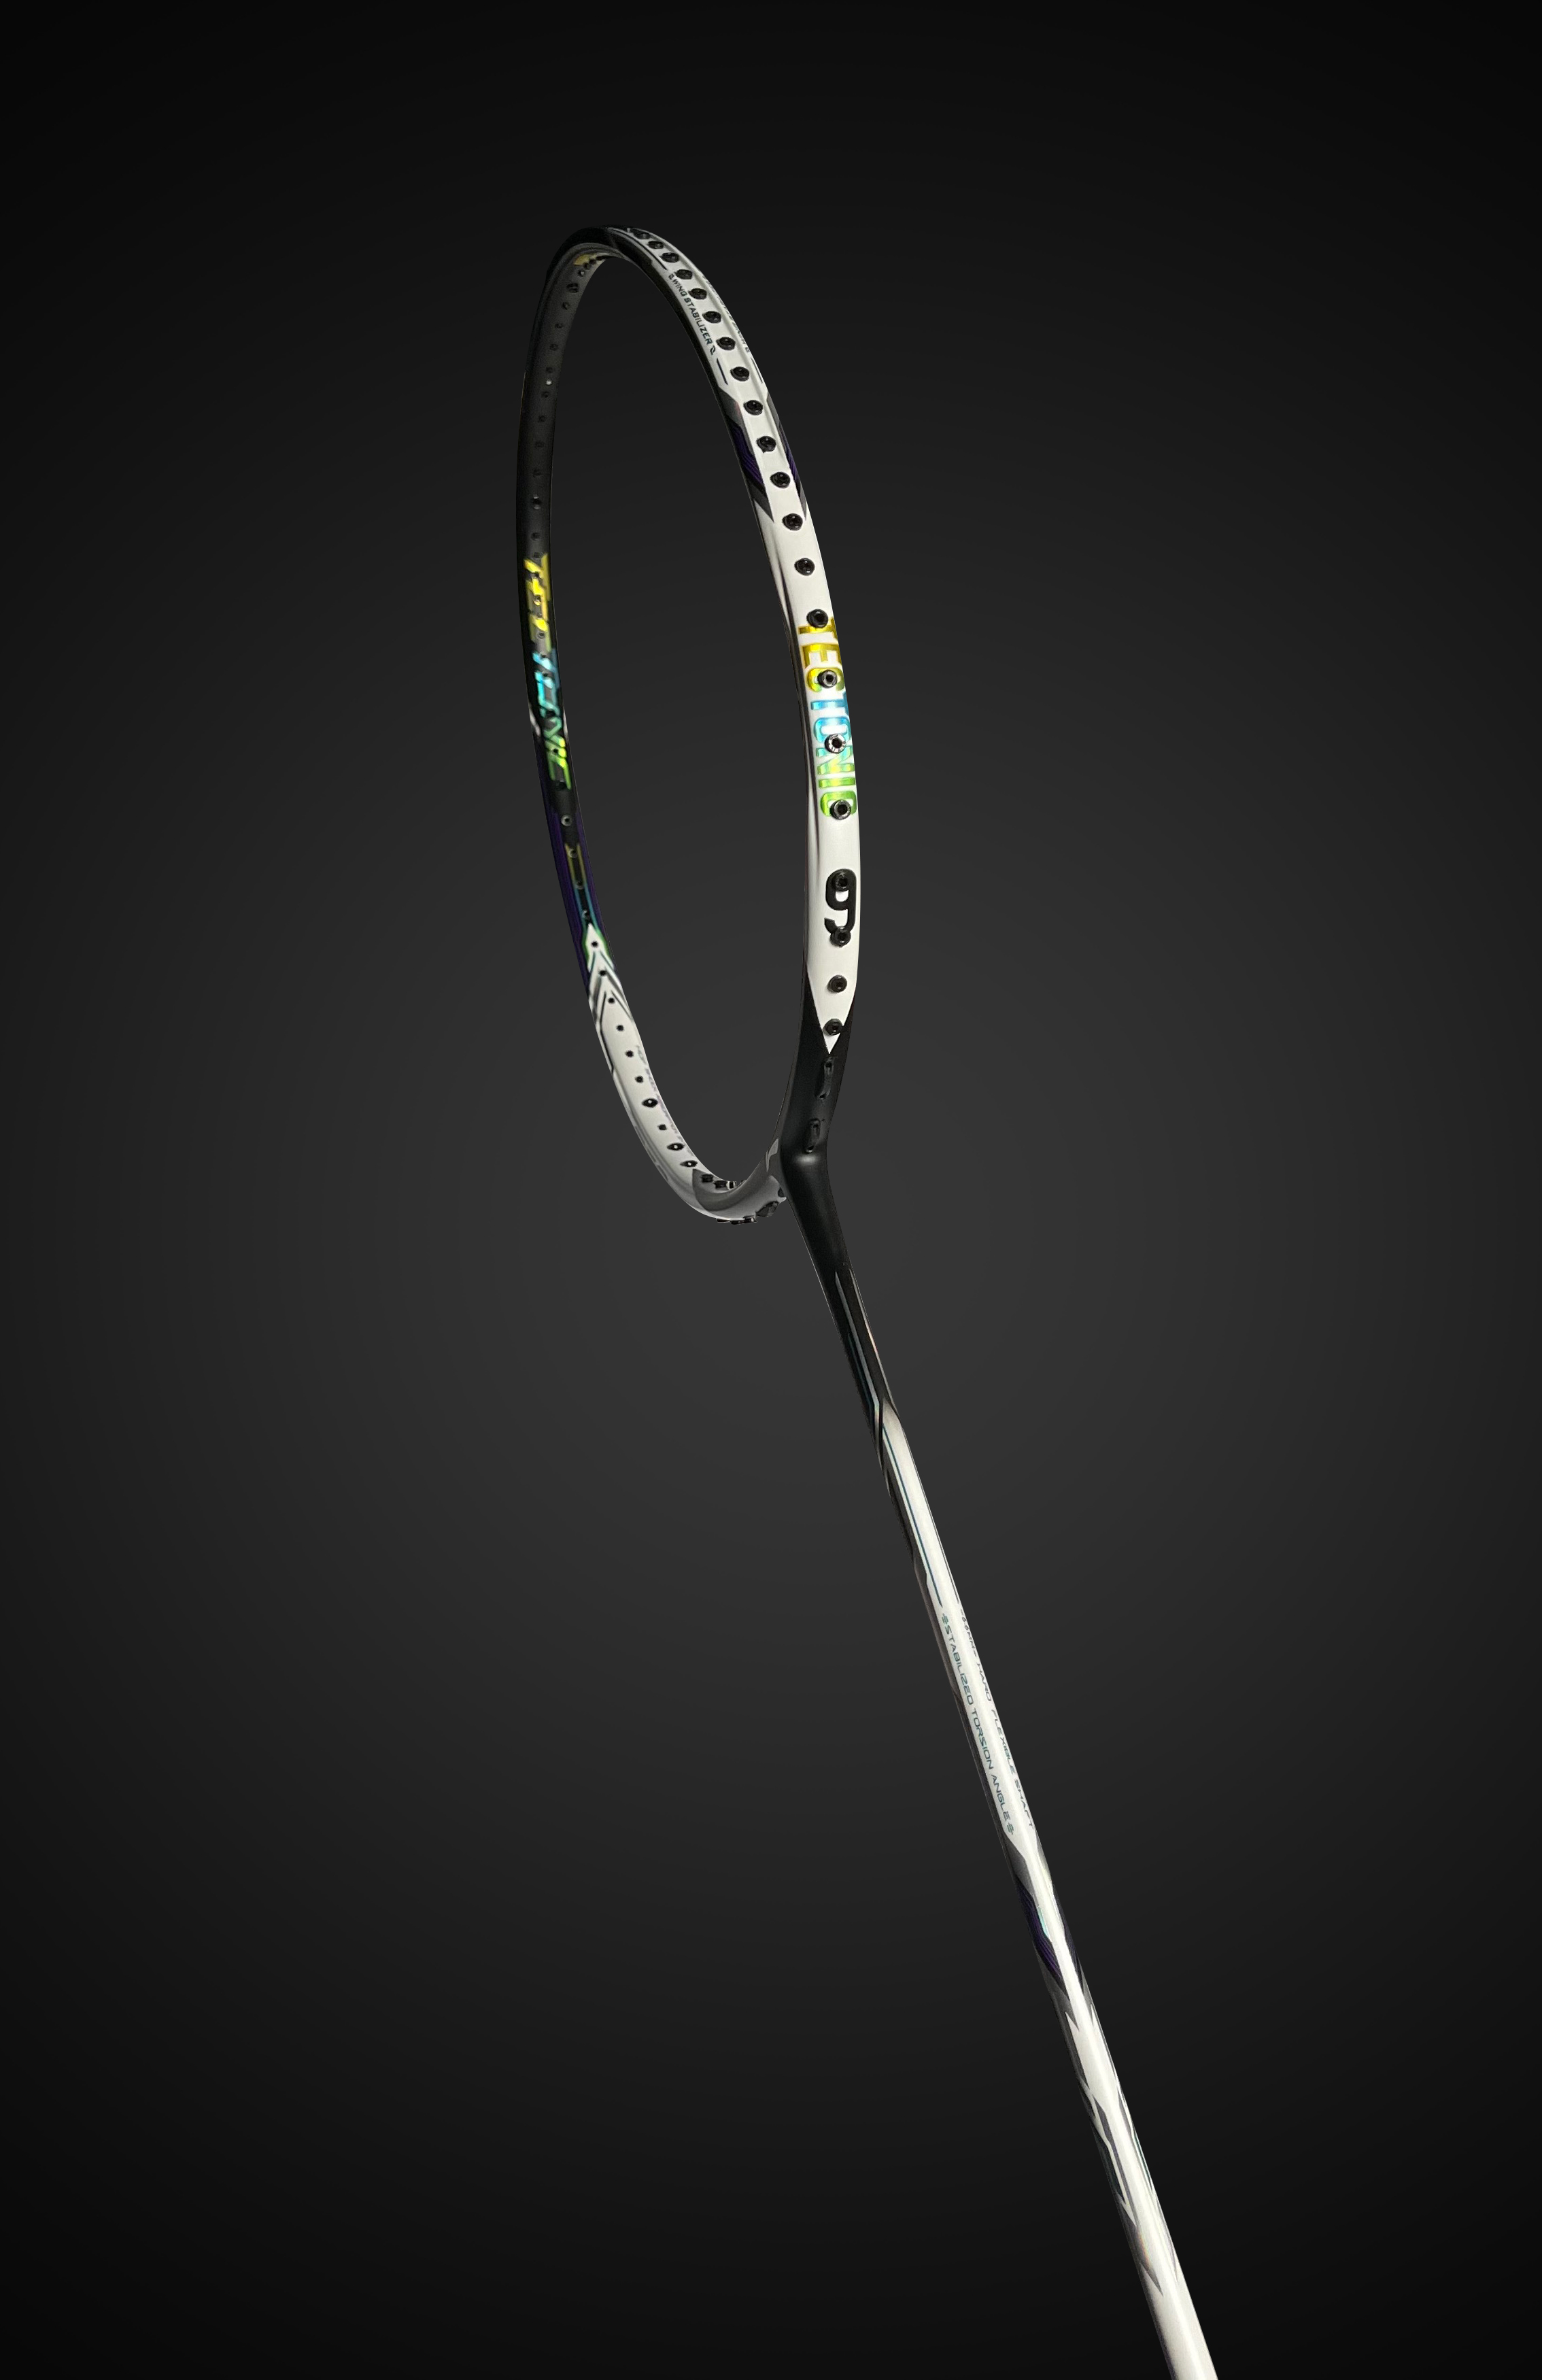 Genuine Li Ning Tectonic 9 Badminton Speed Racket, Head Heavy 5U5 79 grams, New